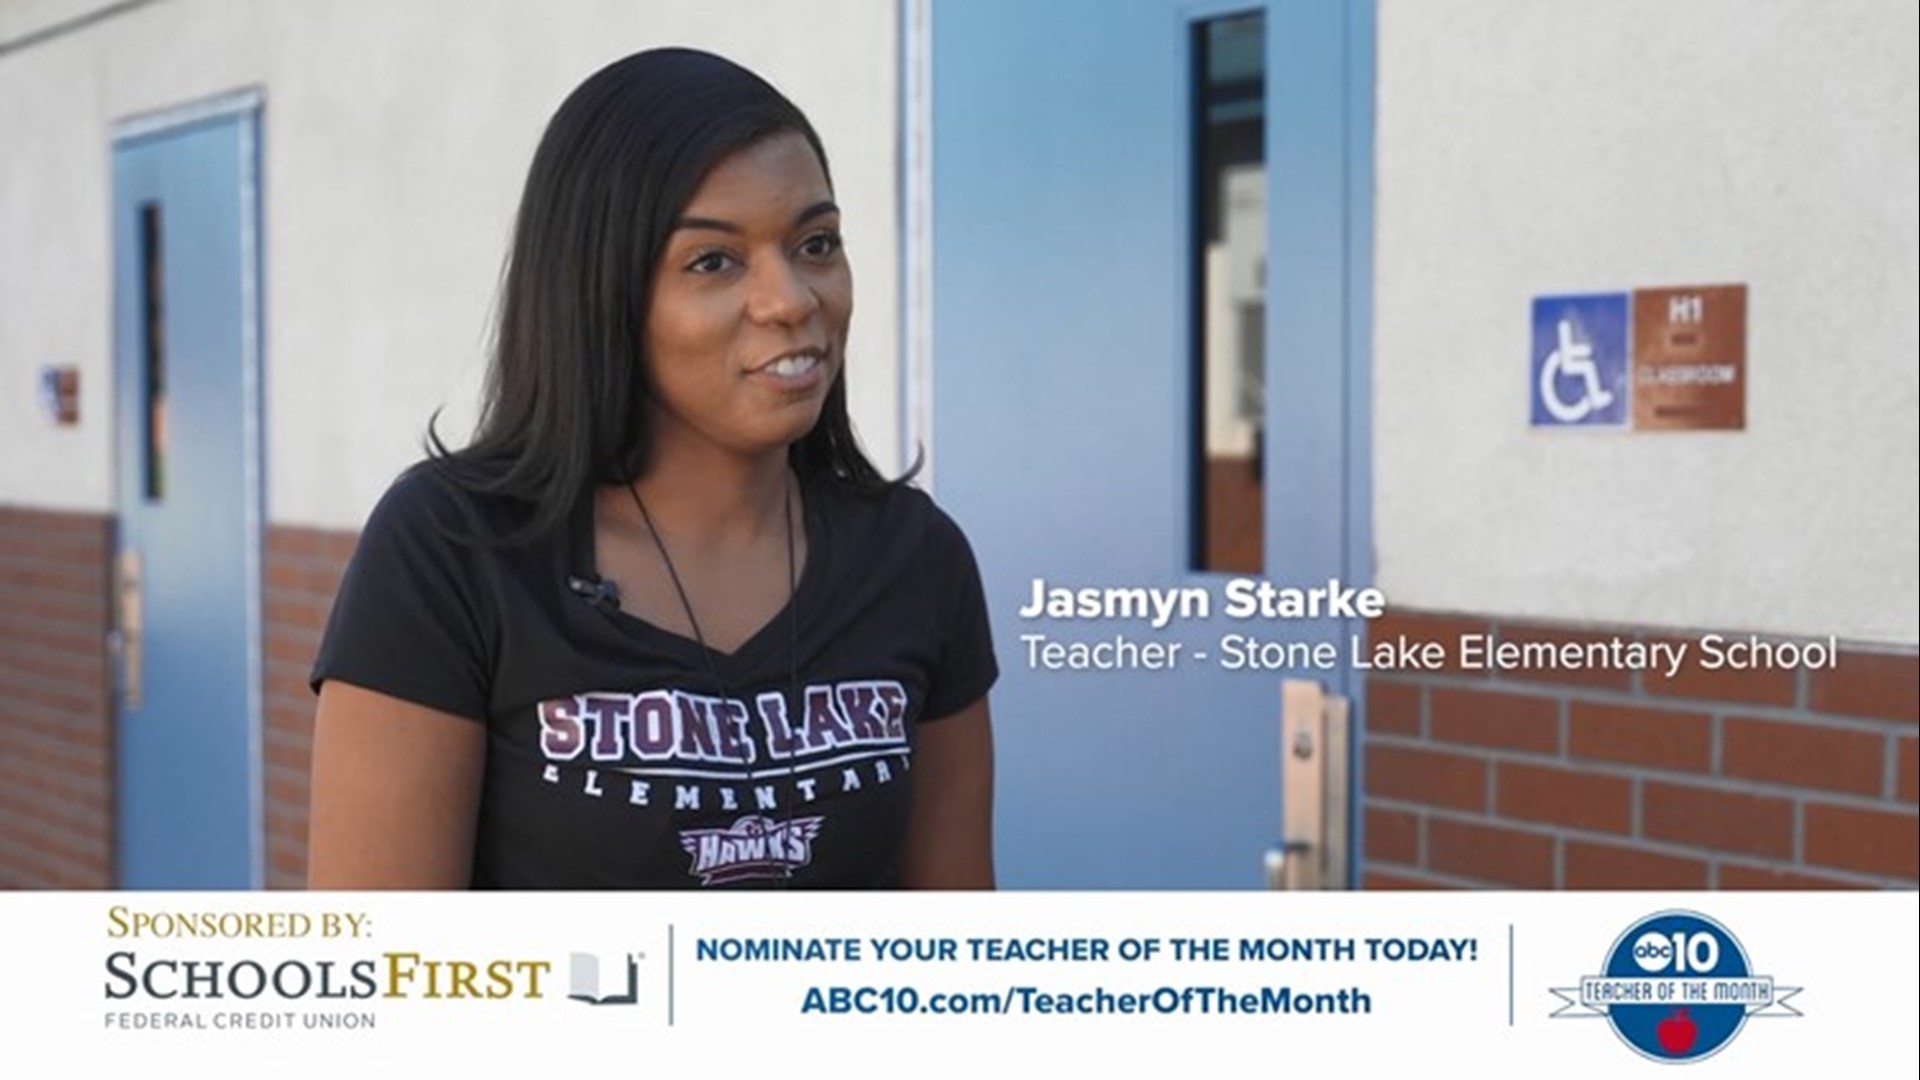 Jasmyn Starke is a 5th Grade Teacher at Stone Lake Elementary School in Elk Grove, CA.